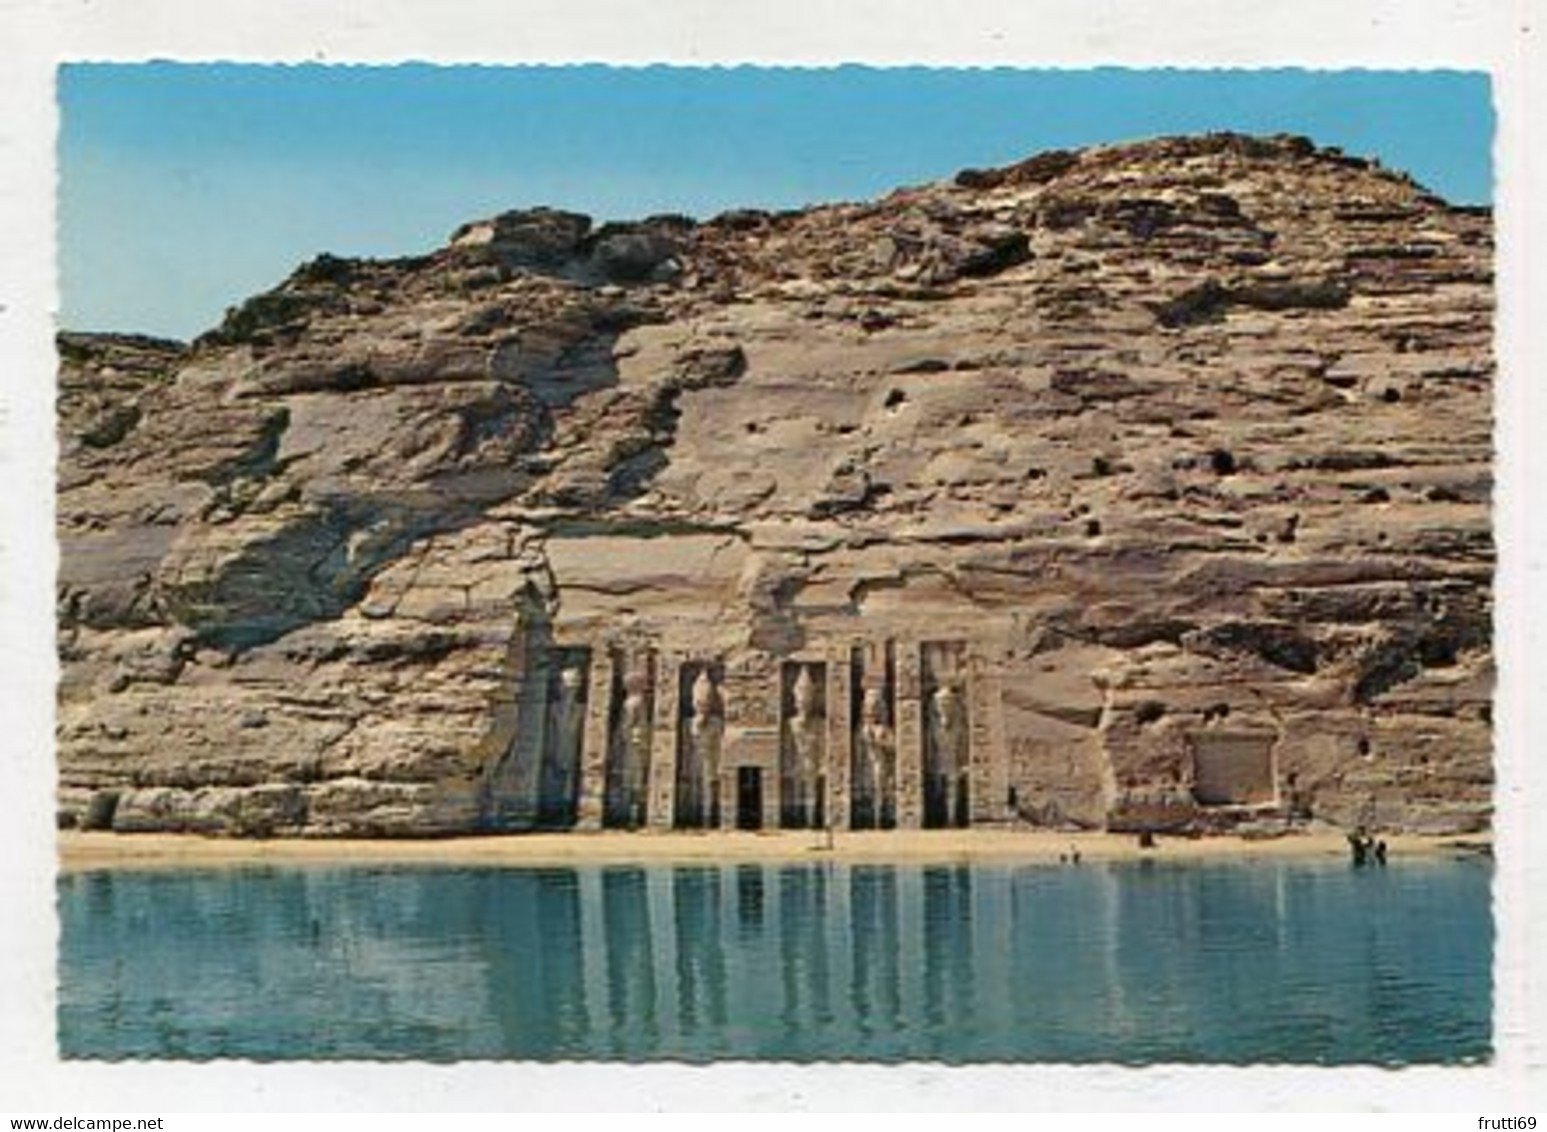 AK 057706 EGYPT - Abu Simbel - Small Rock Temple - Temples D'Abou Simbel